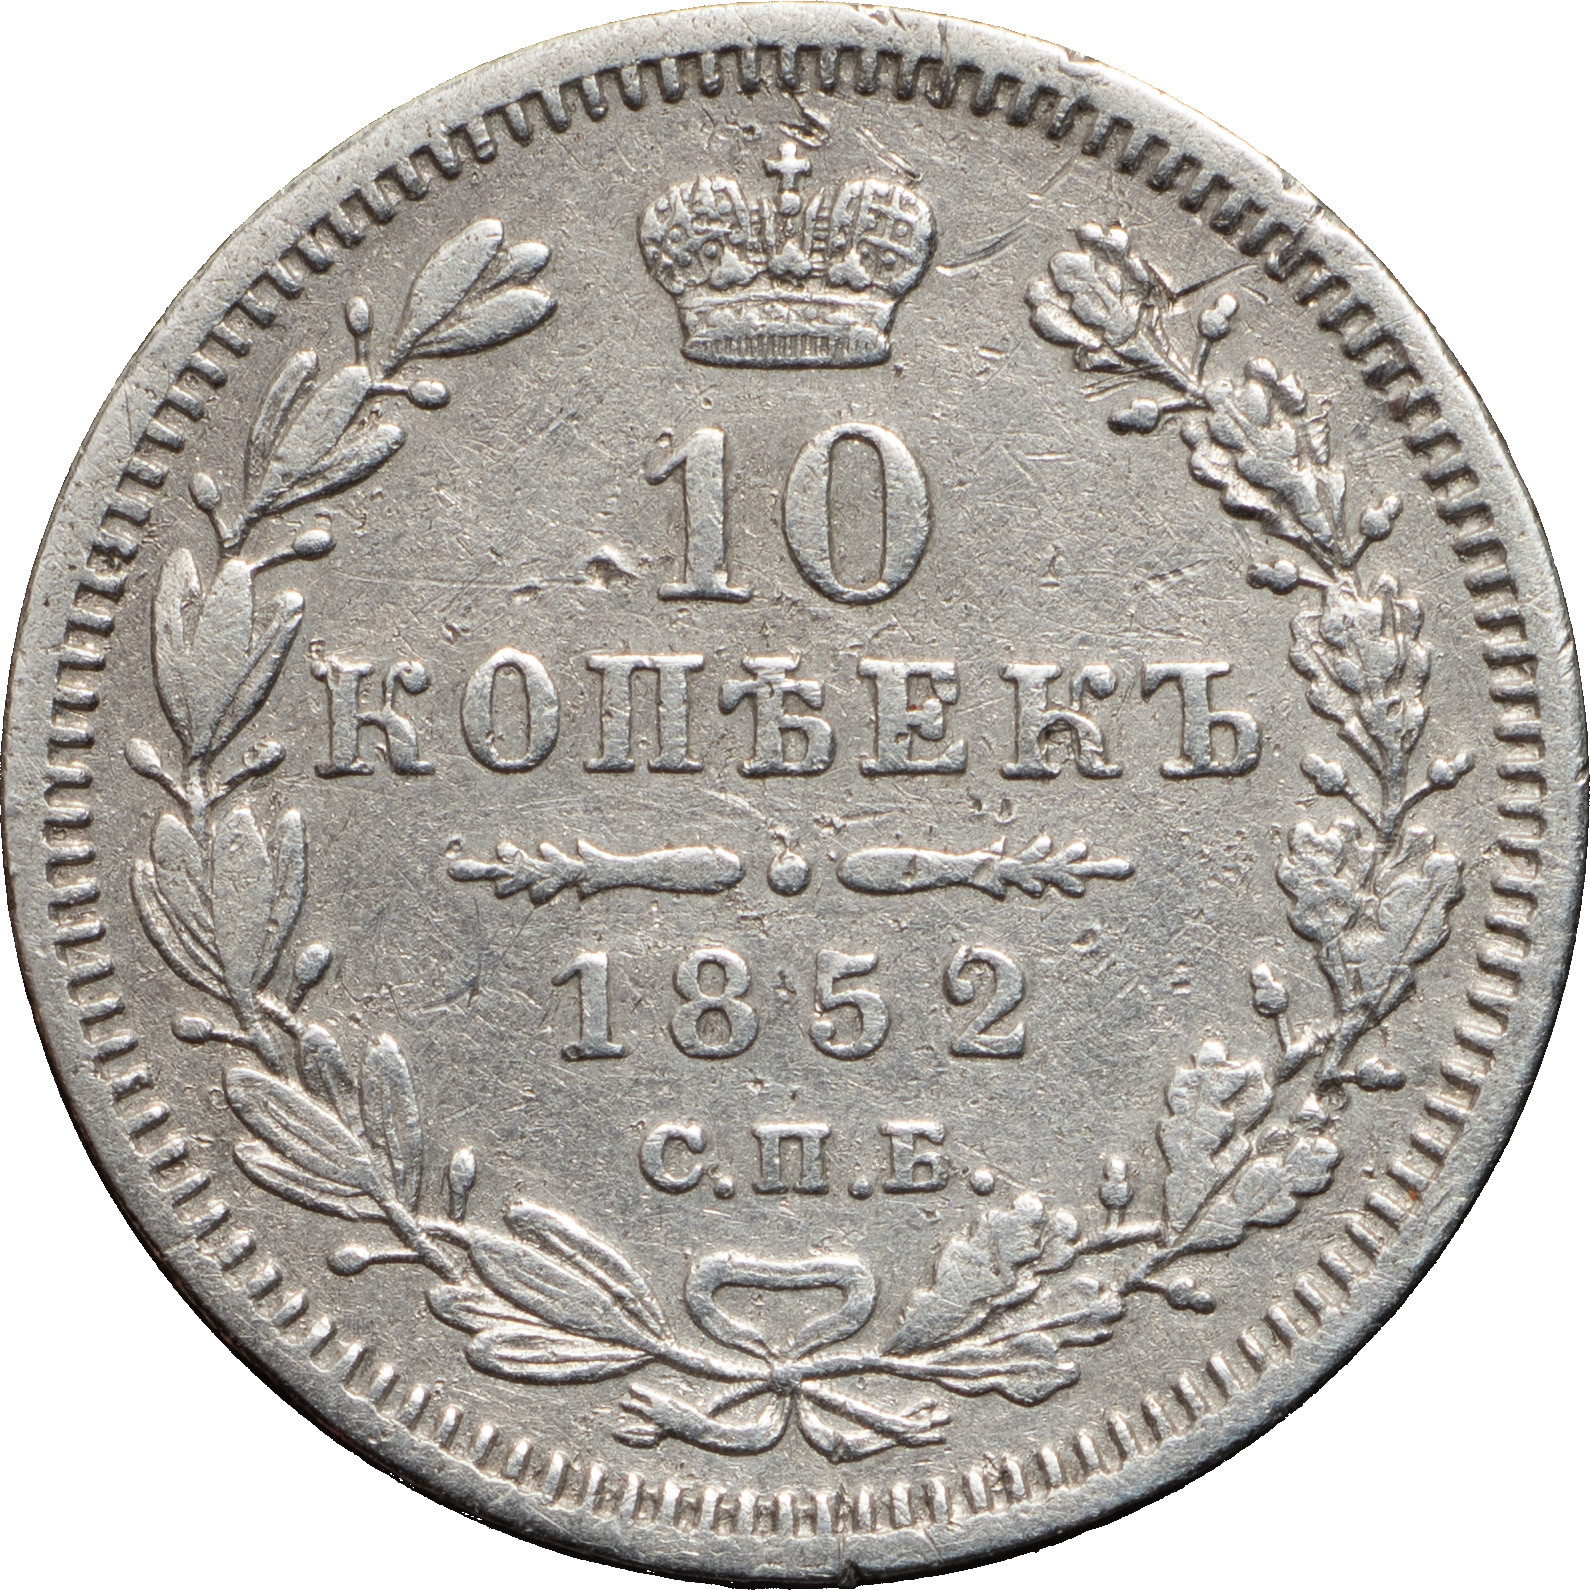 10 копеек 1852 года